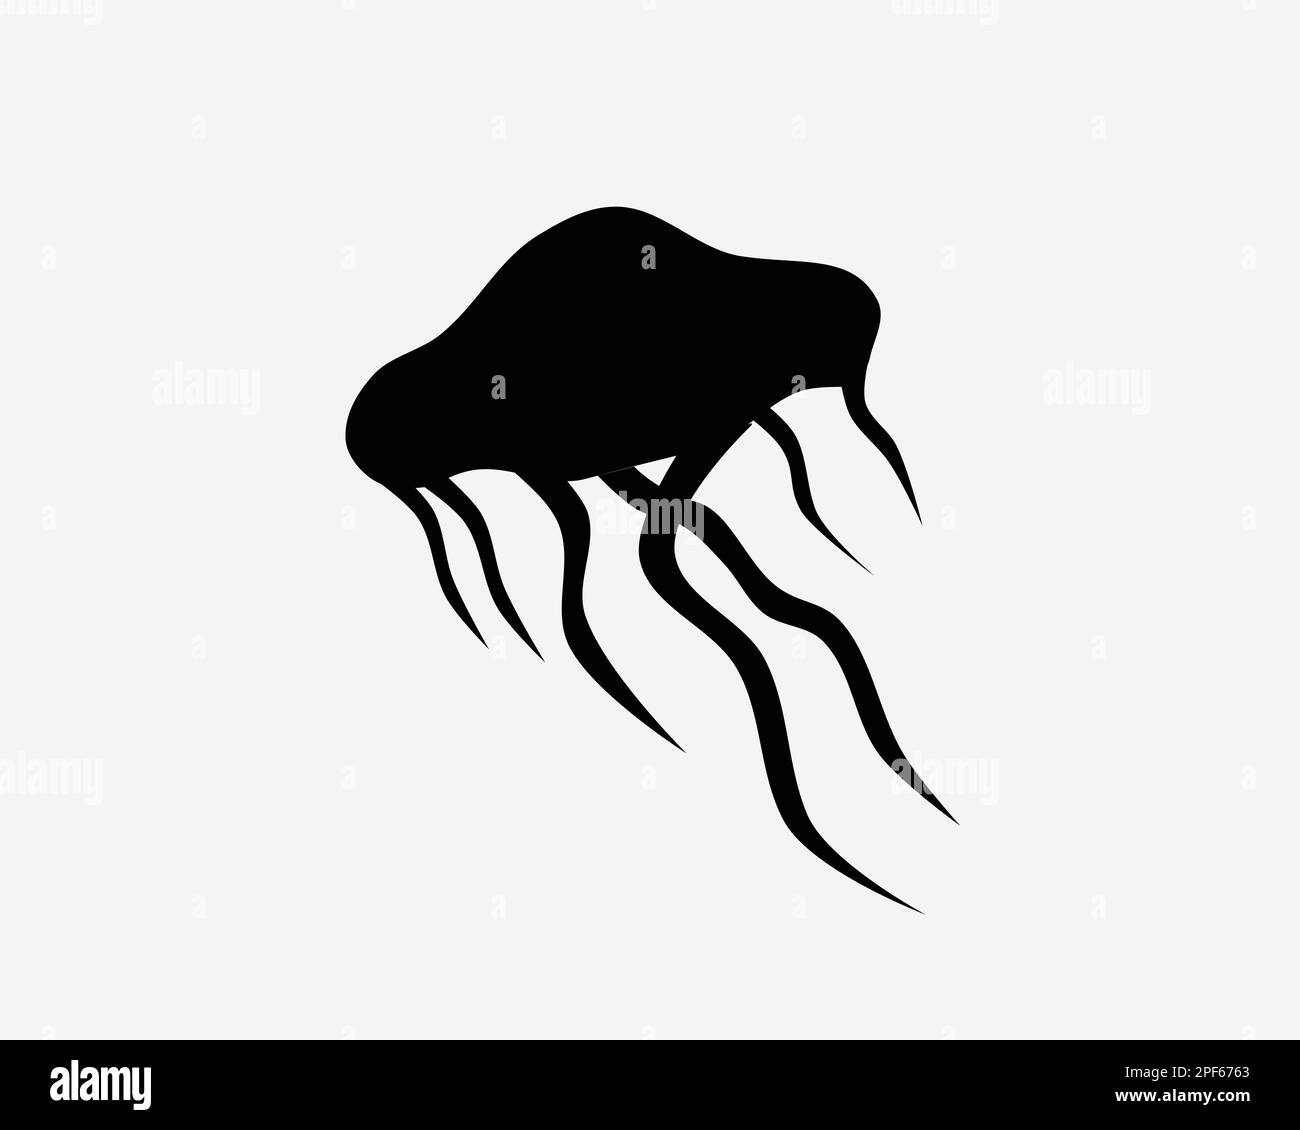 Jellyfish Icon Jelly Fish Animal Water Sea Ocean Creature Vector Black White Silhouette Symbol Sign Graphic Clipart Artwork Illustration Pictogram Stock Vector